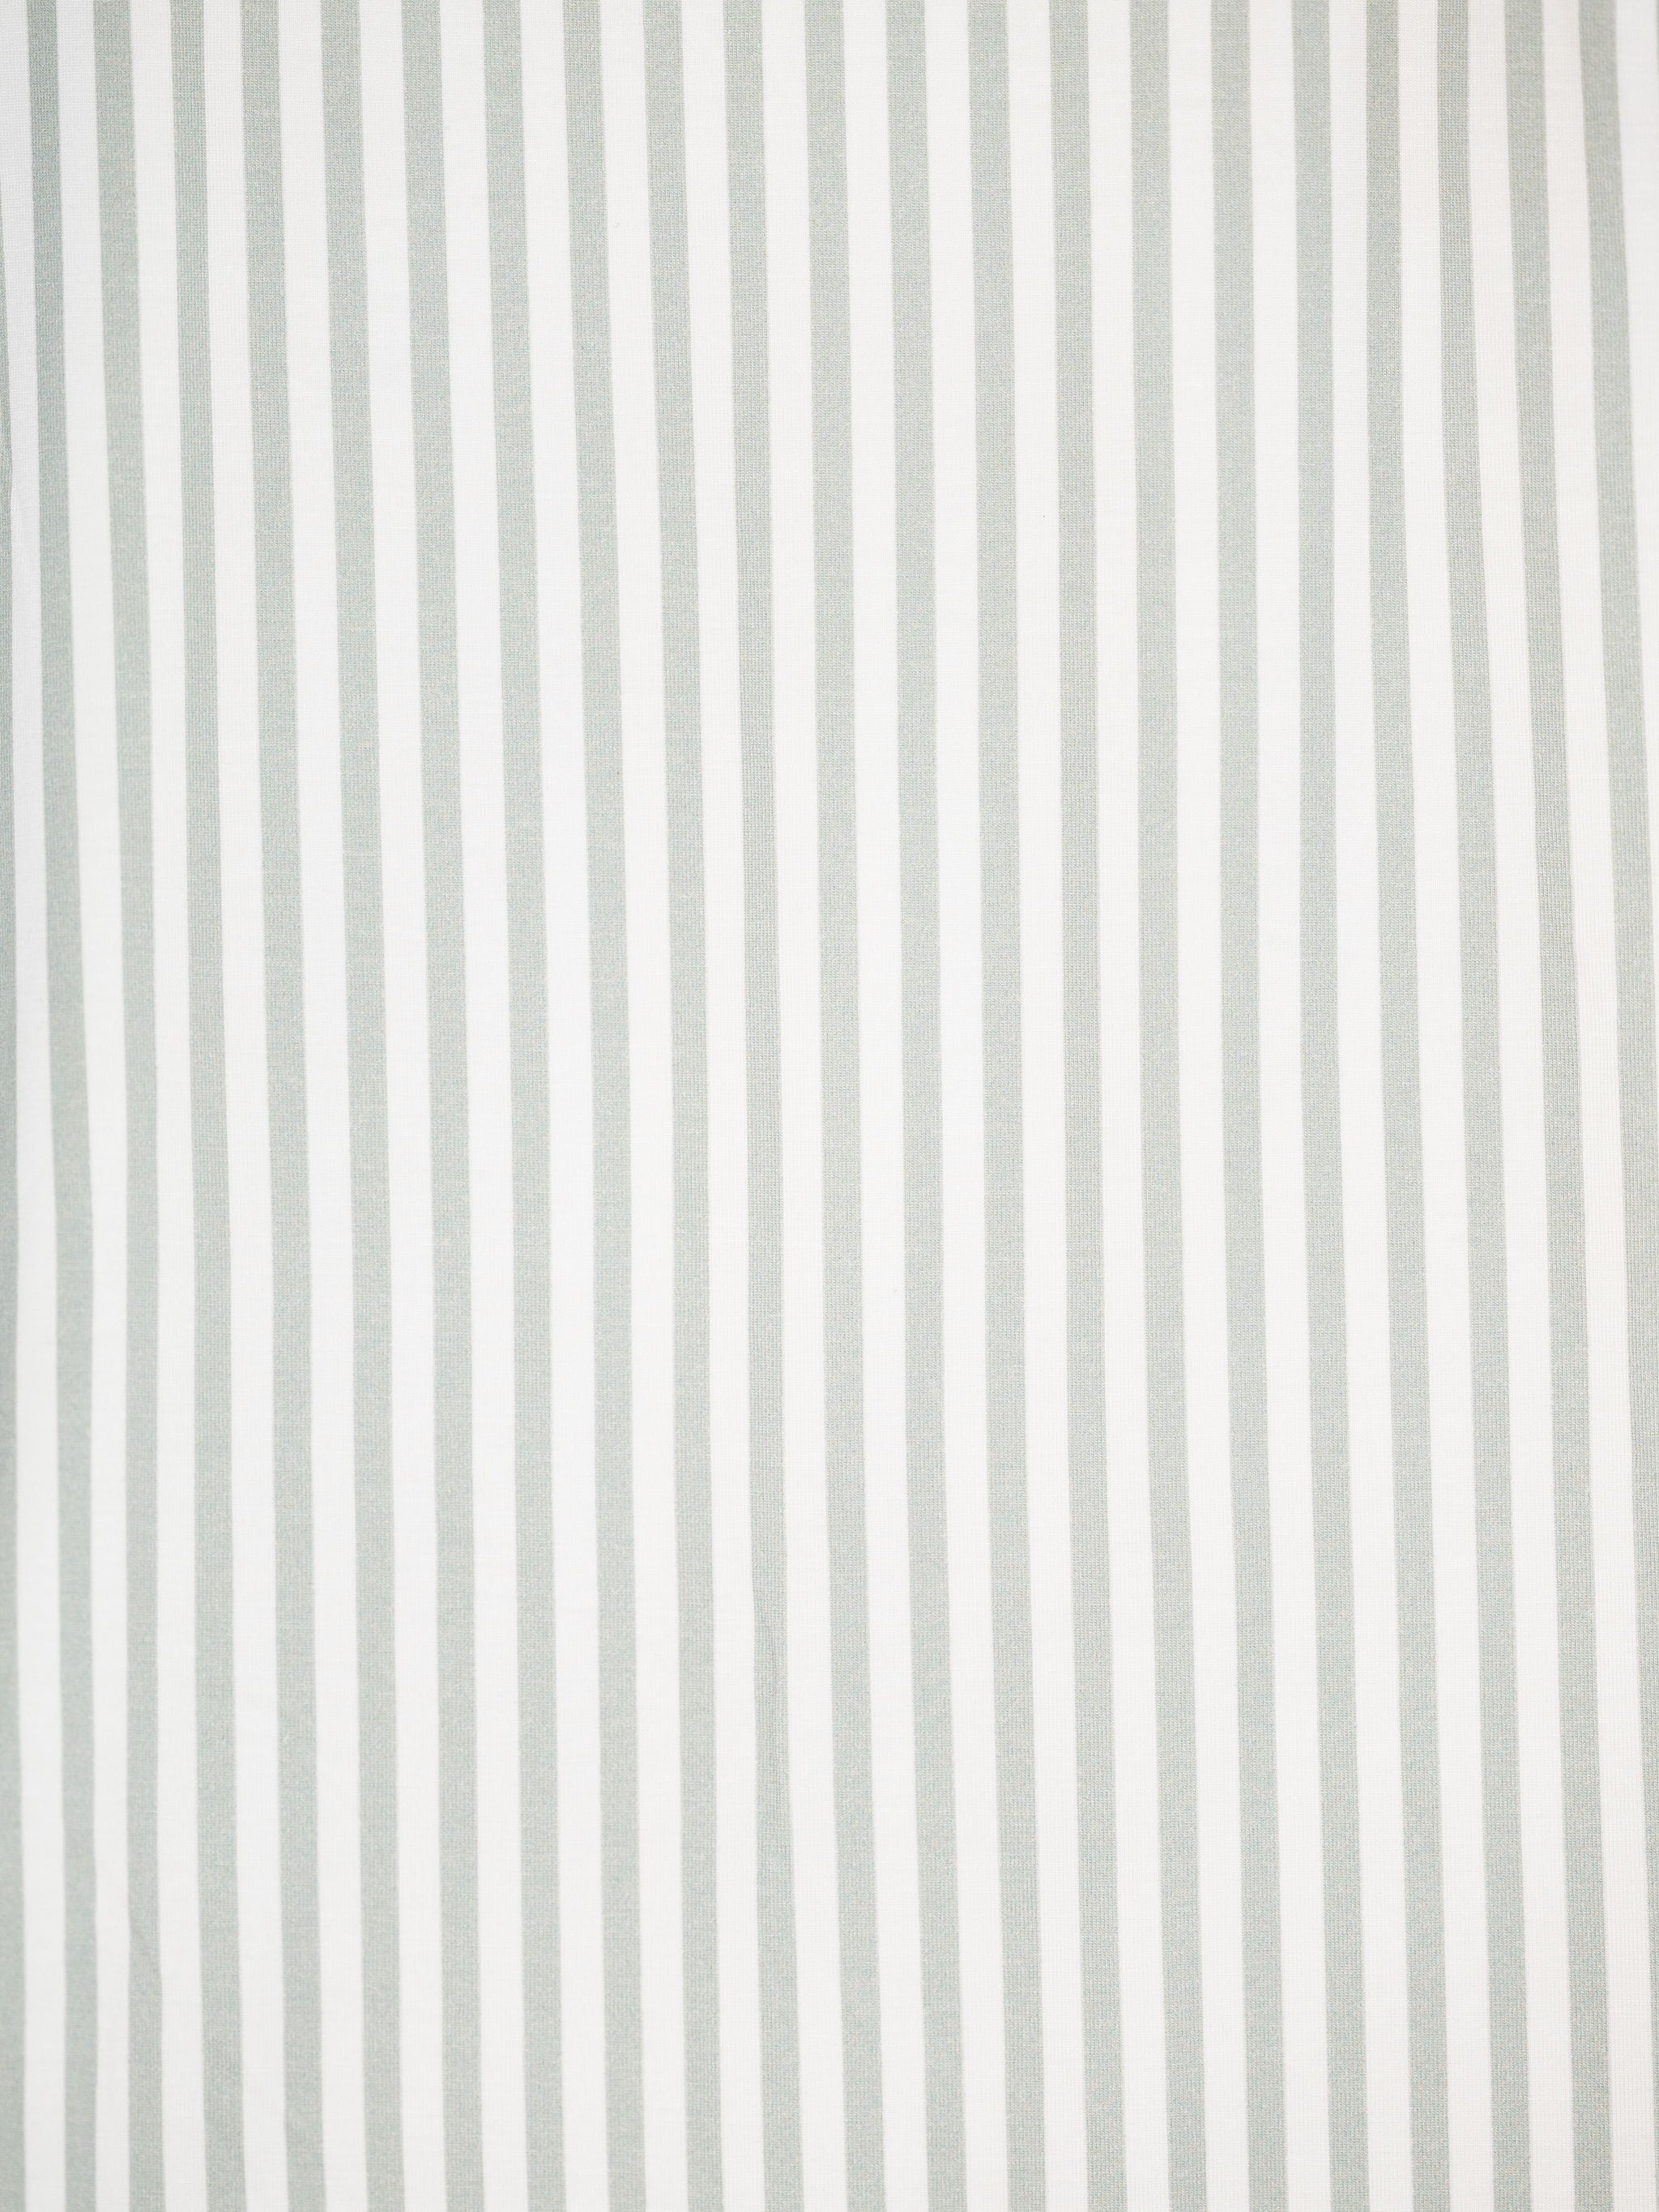 Crib Sheet - Mini Stripe